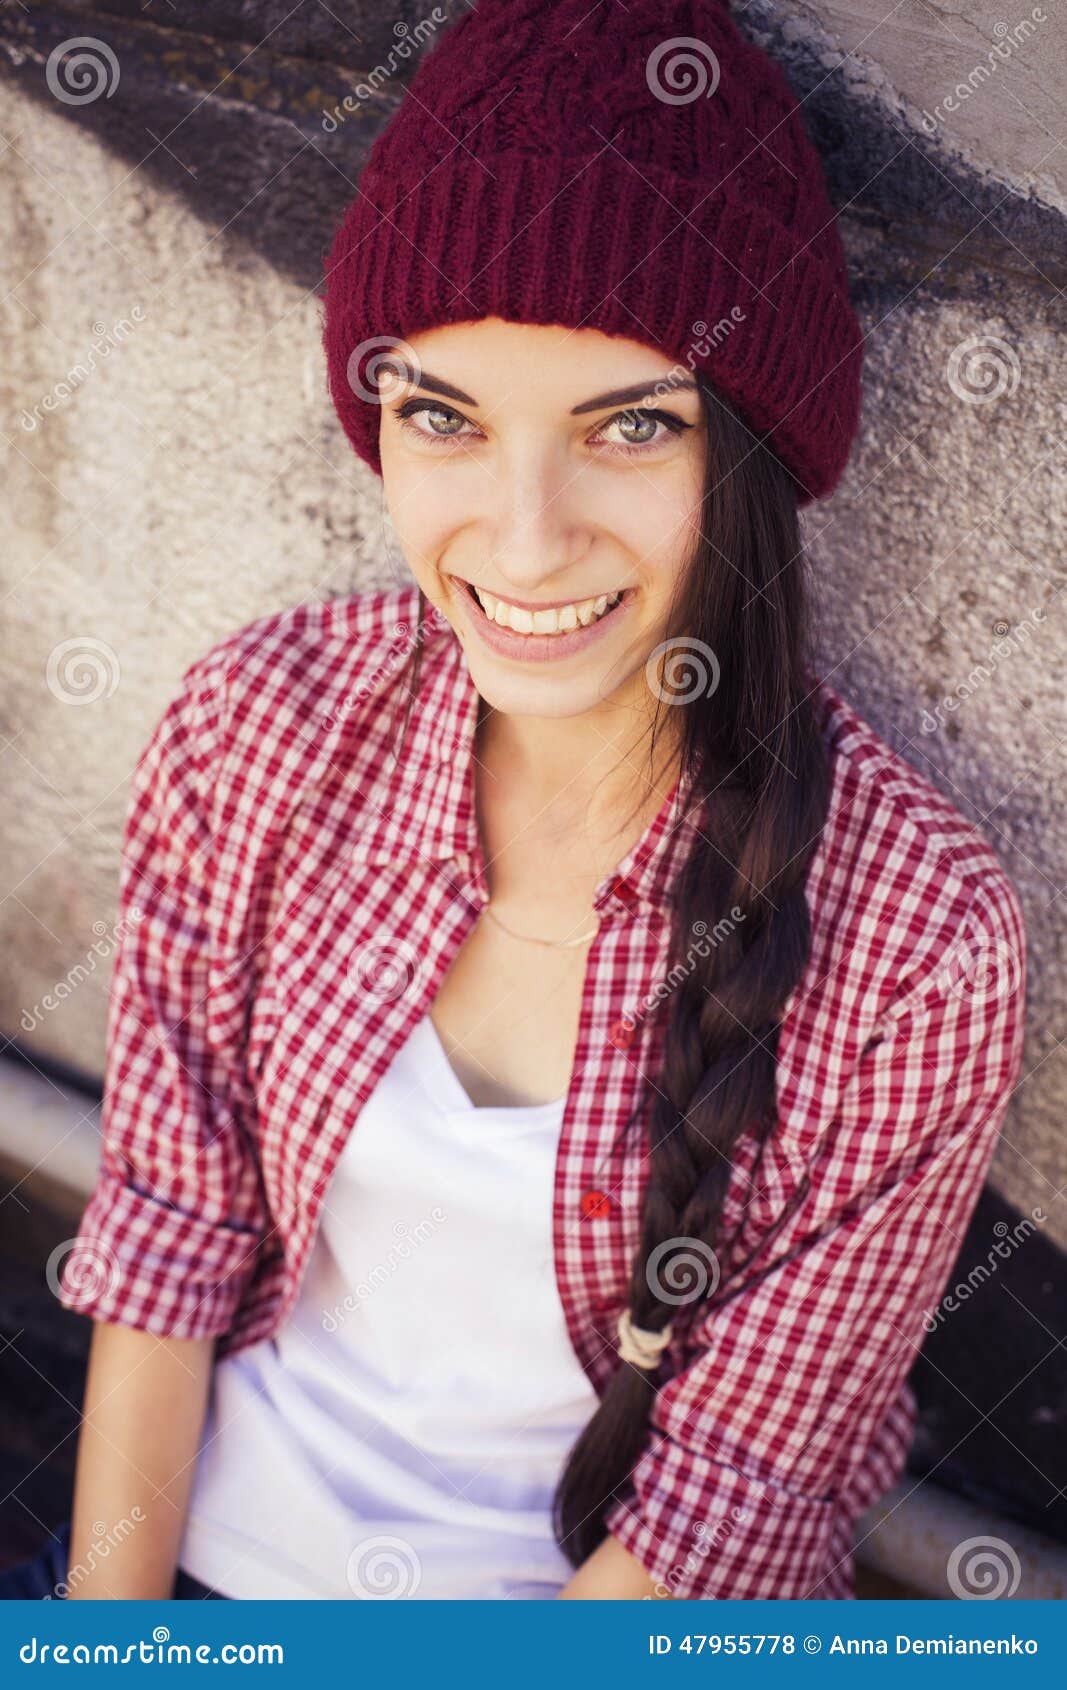 https://thumbs.dreamstime.com/z/brunette-teenage-girl-hipster-outfit-jeans-shorts-keds-plaid-shirt-hat-skateboard-park-outdoors-47955778.jpg